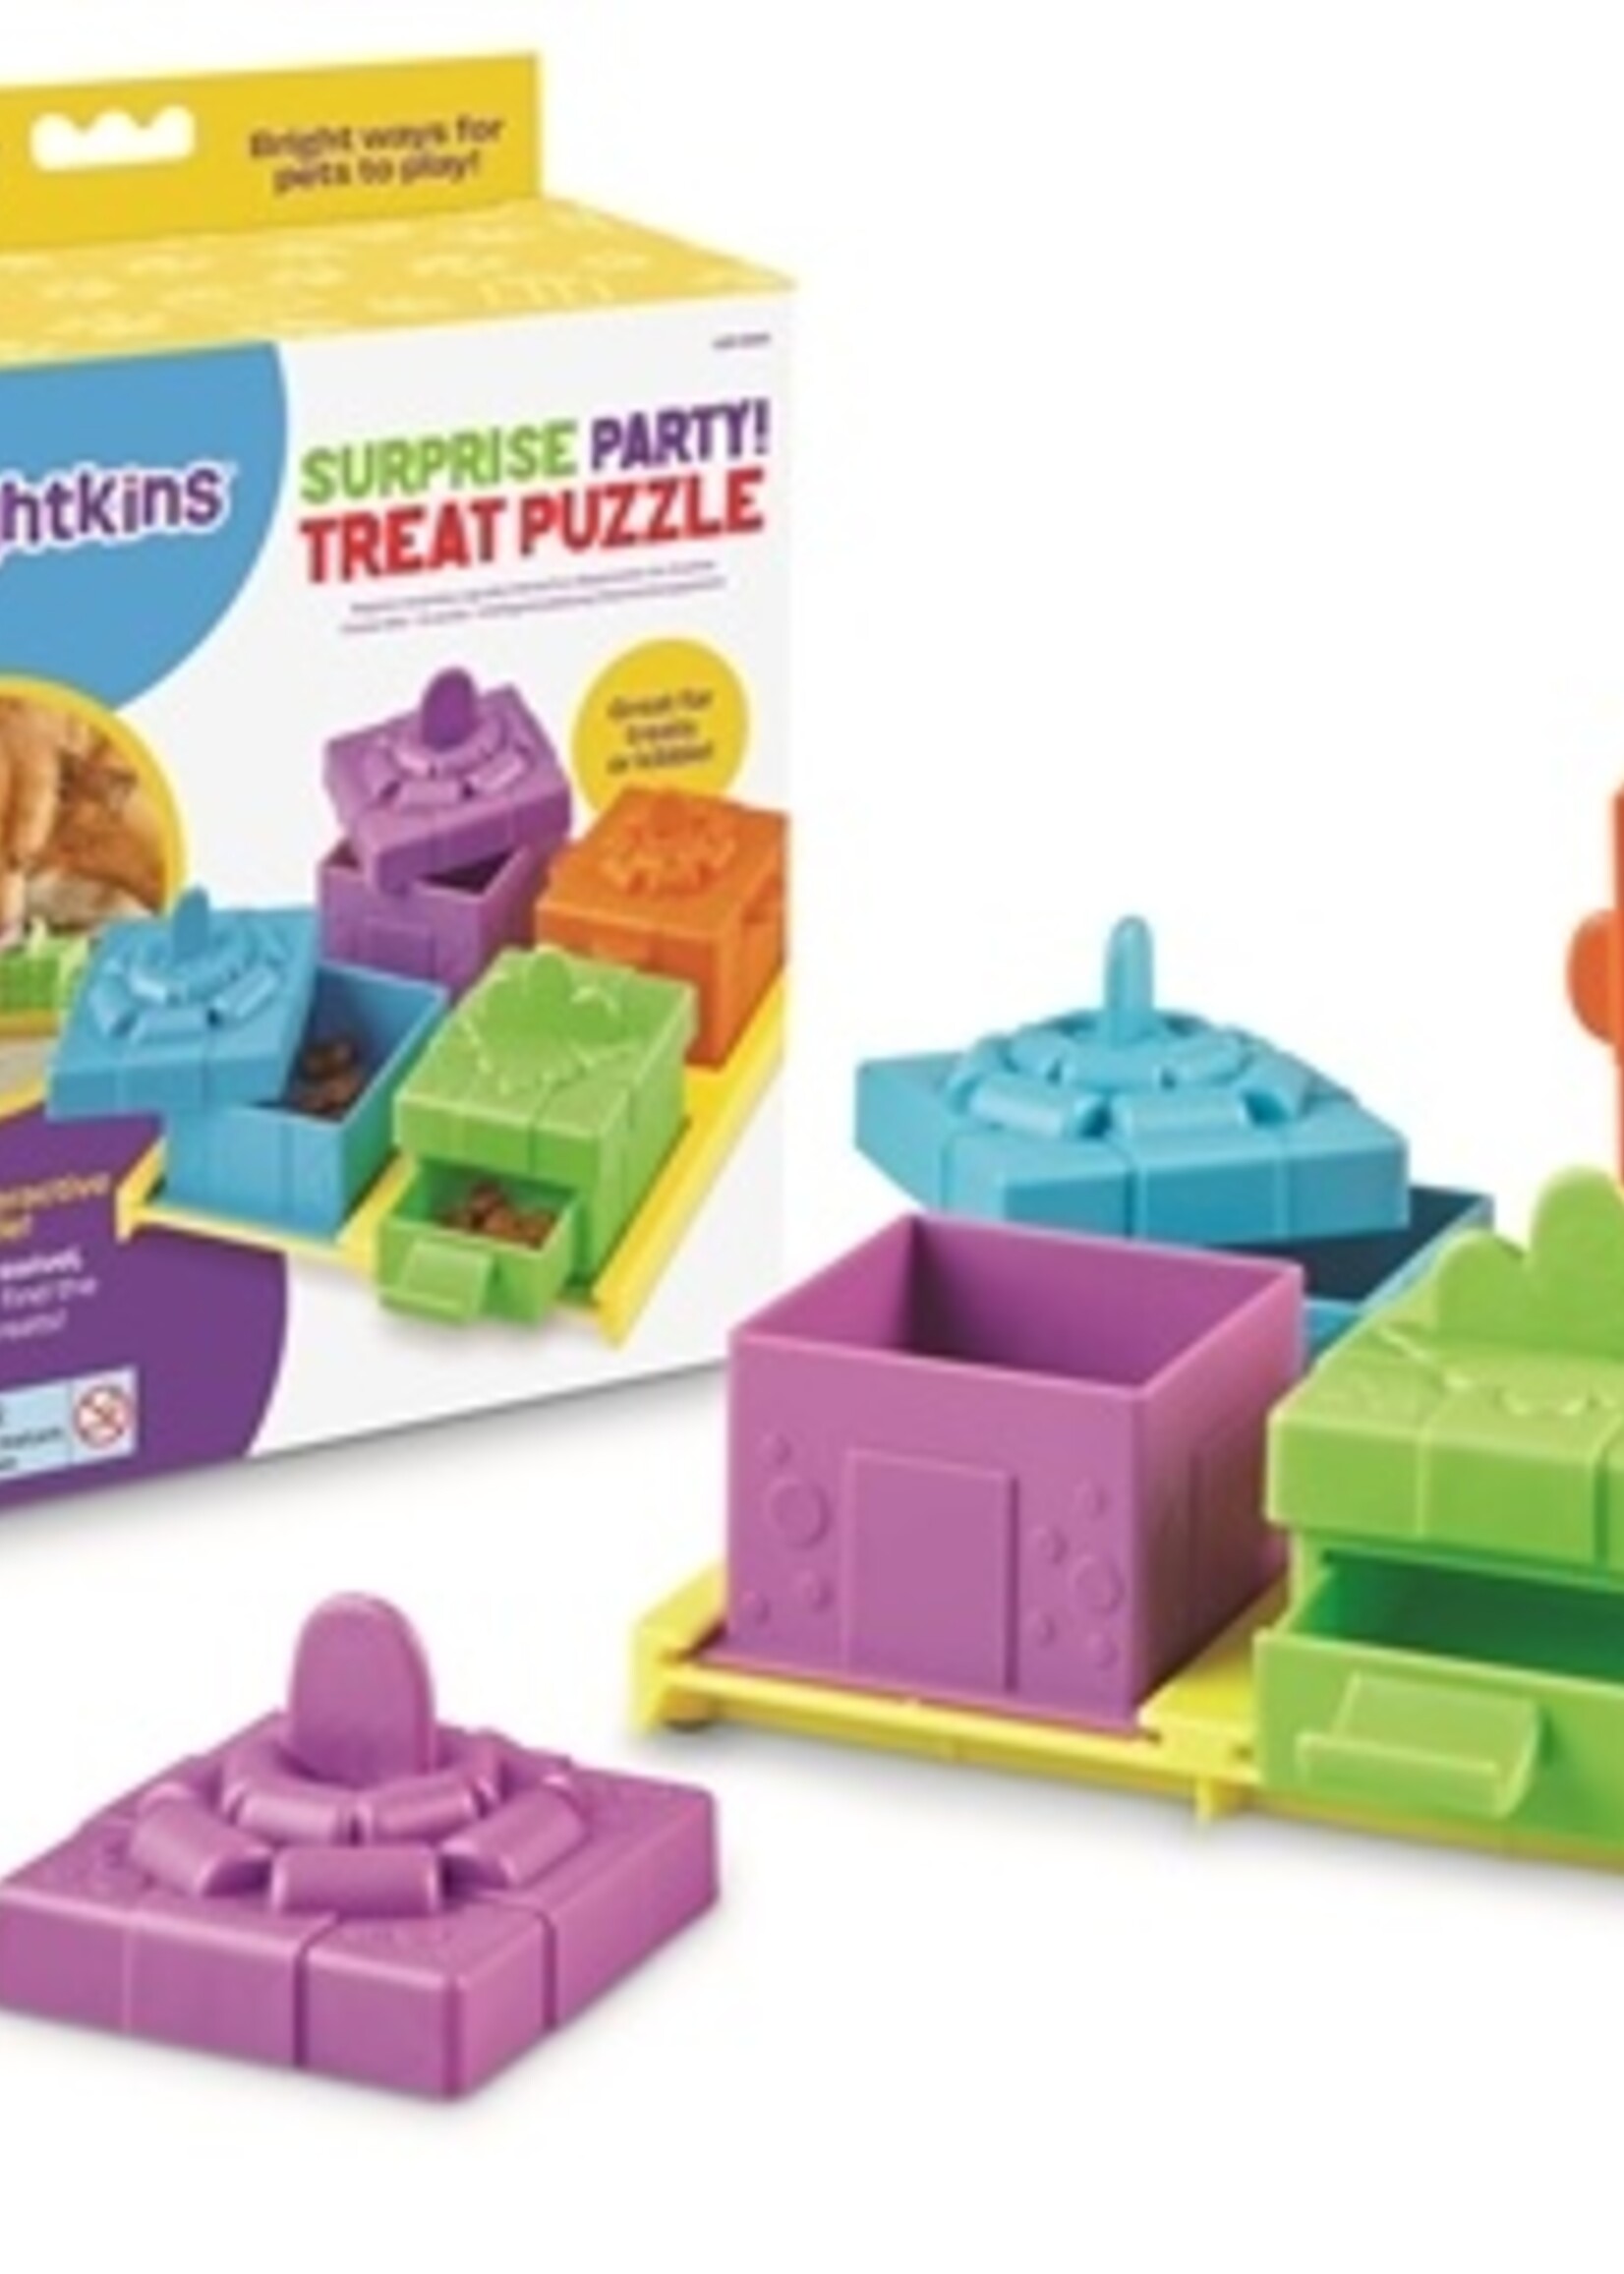 Brightkins Brightkins surprise party treat puzzle